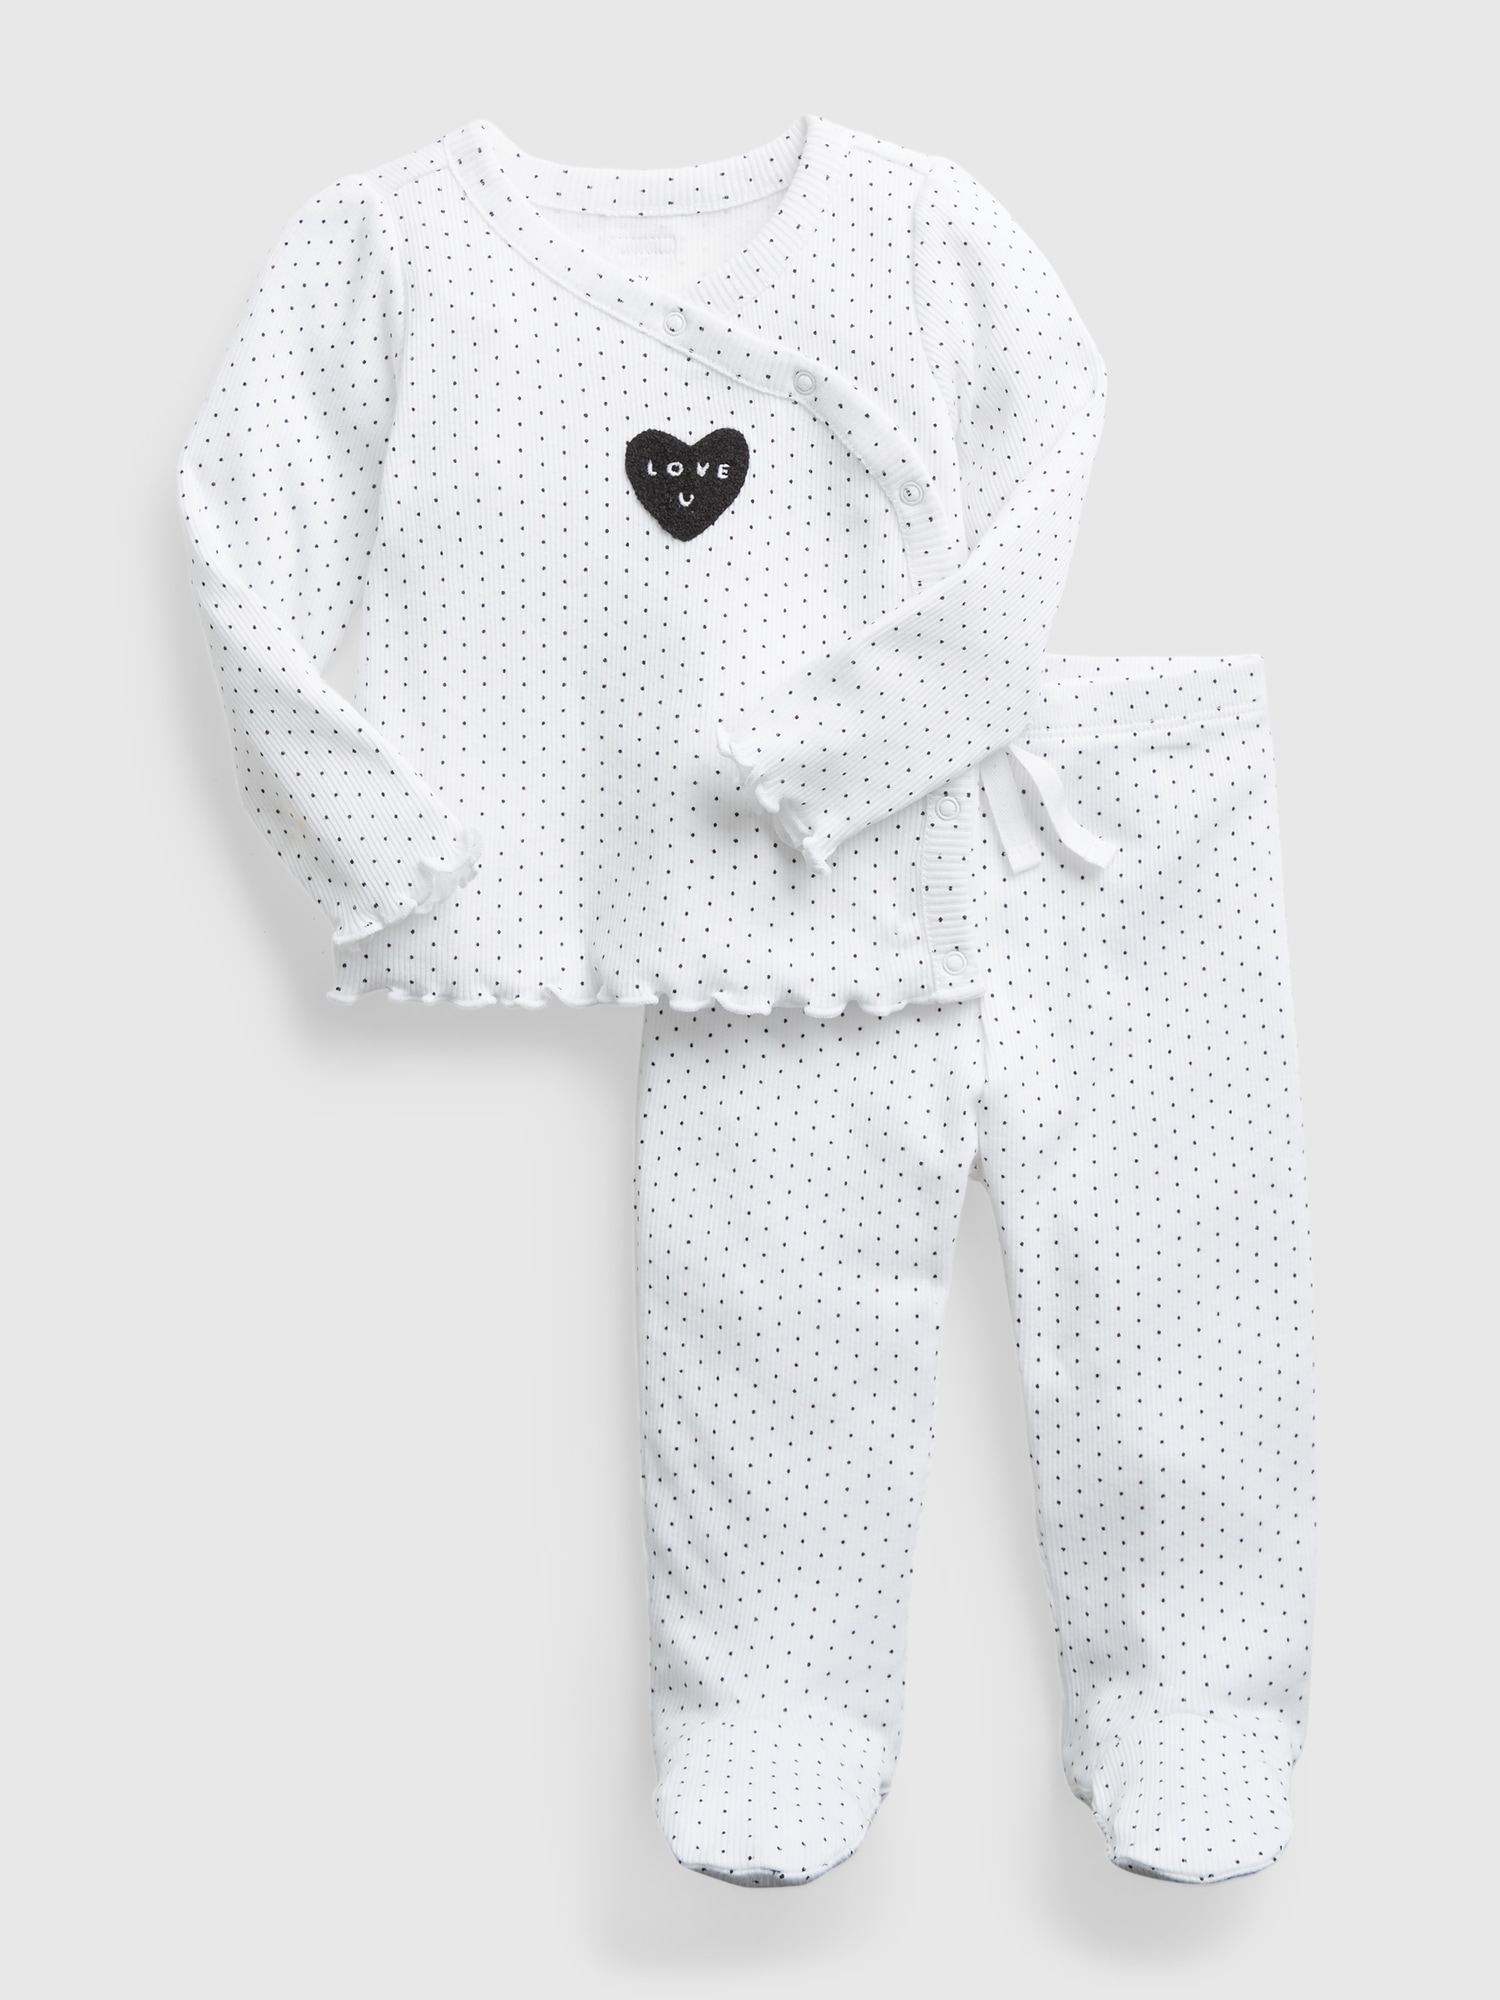 Buy Online Organic Cotton Baby Kimono Set - FIRSTIN Brand for 0-2 Years  Organic Baby & Kids Clothing at Rs 399/piece, Kids Organic Clothing in  Erode